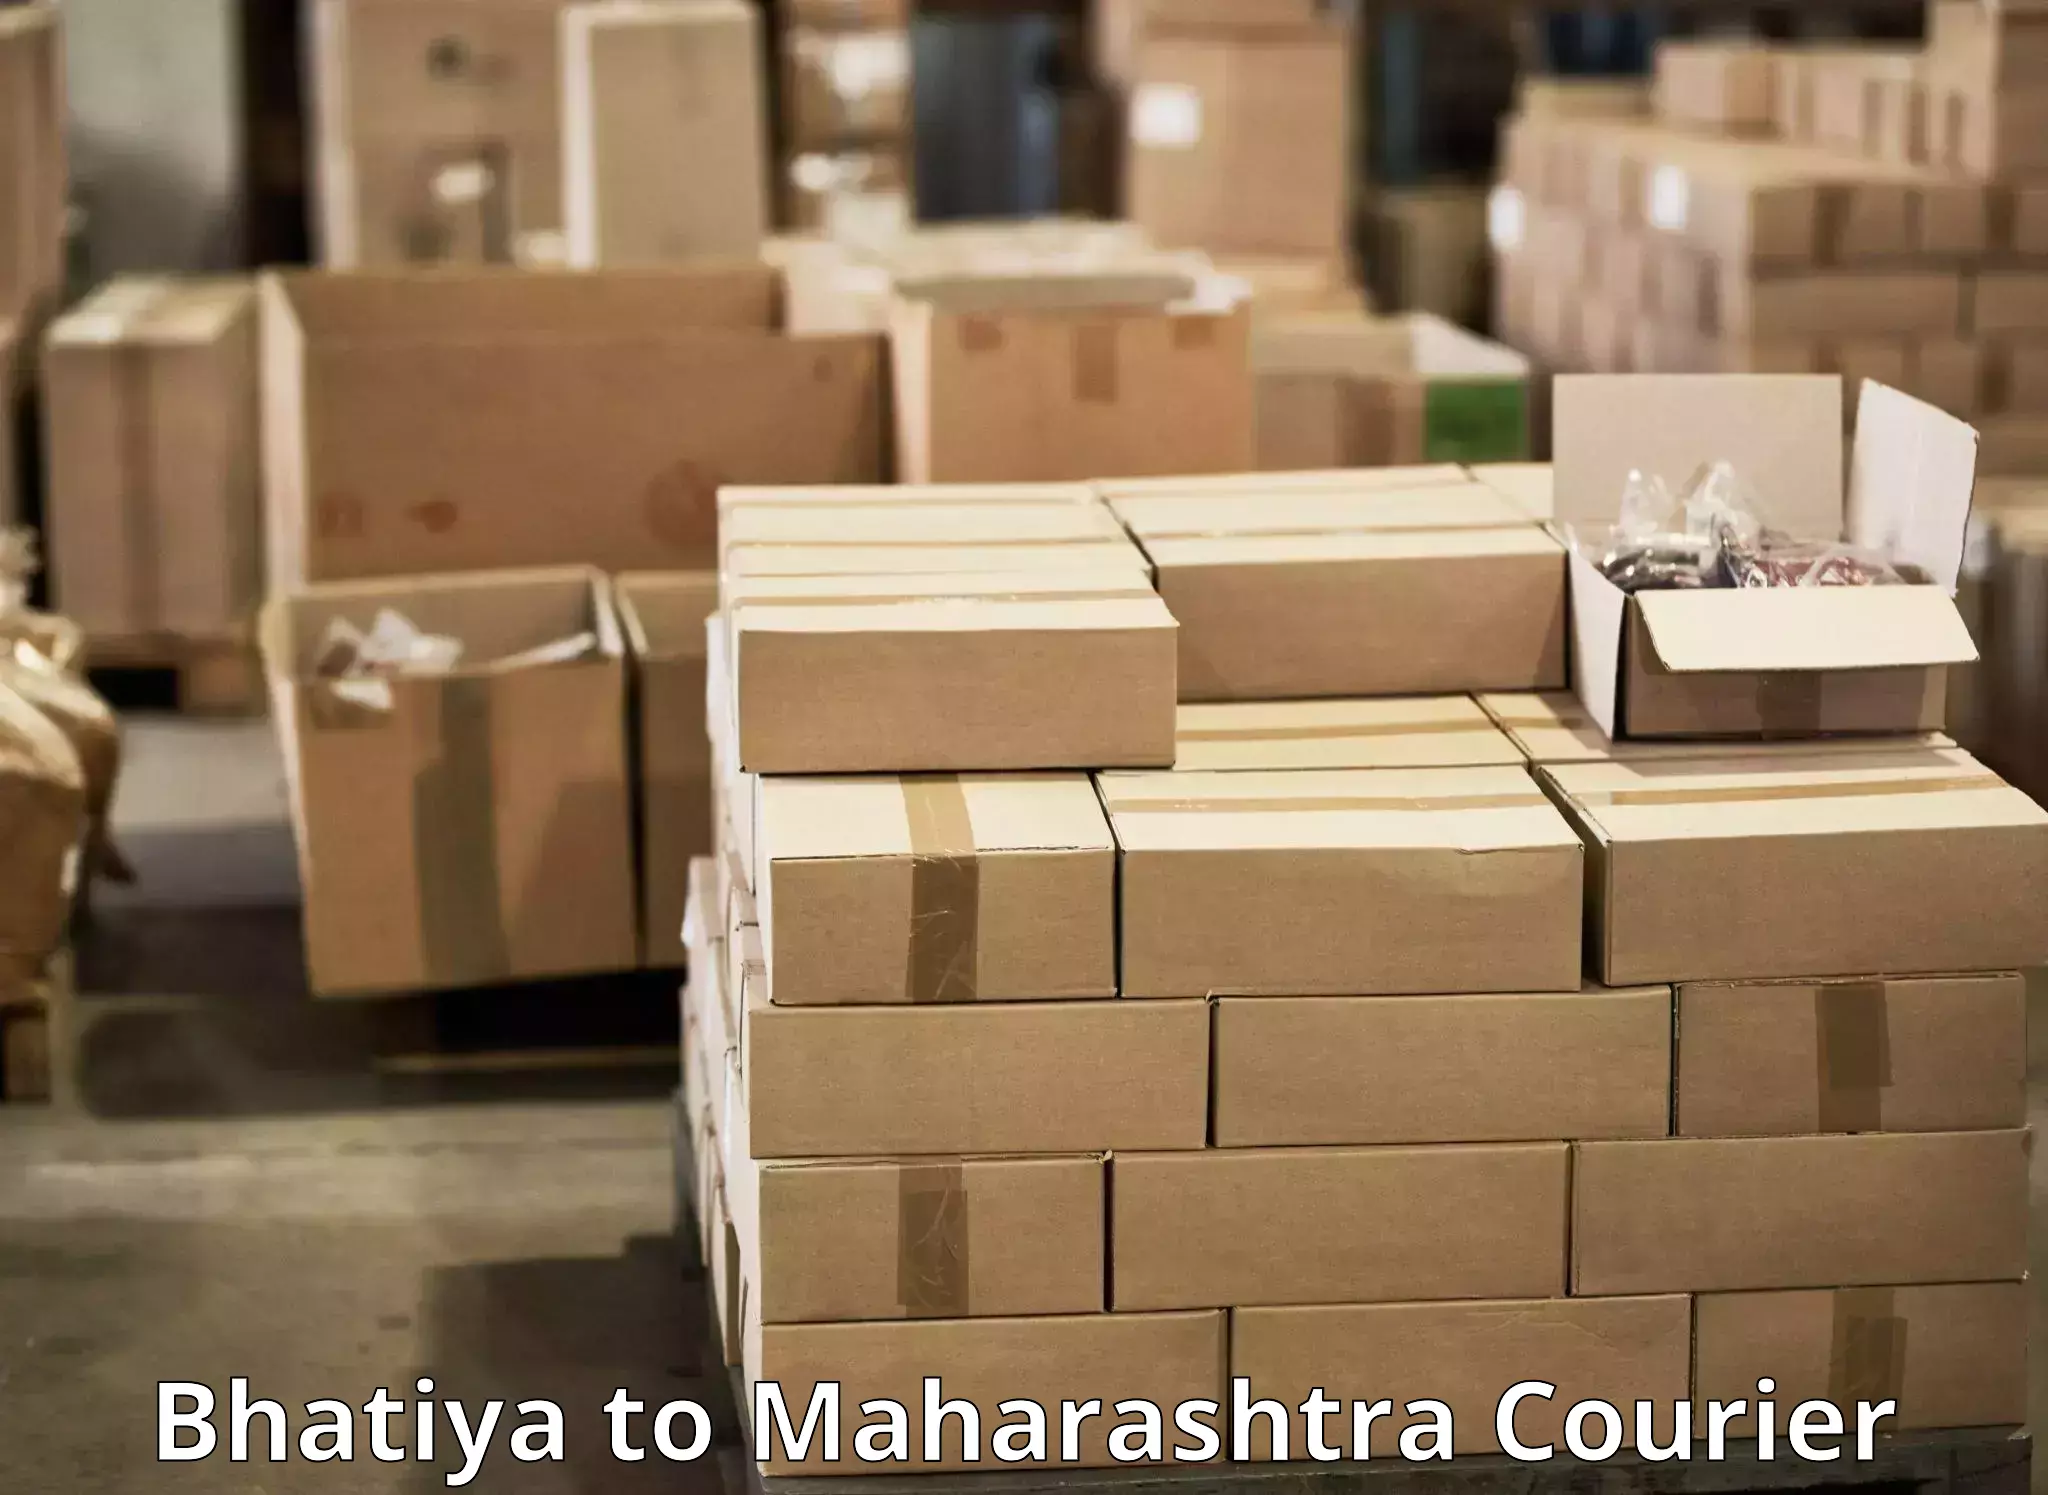 Courier service comparison Bhatiya to Alephata